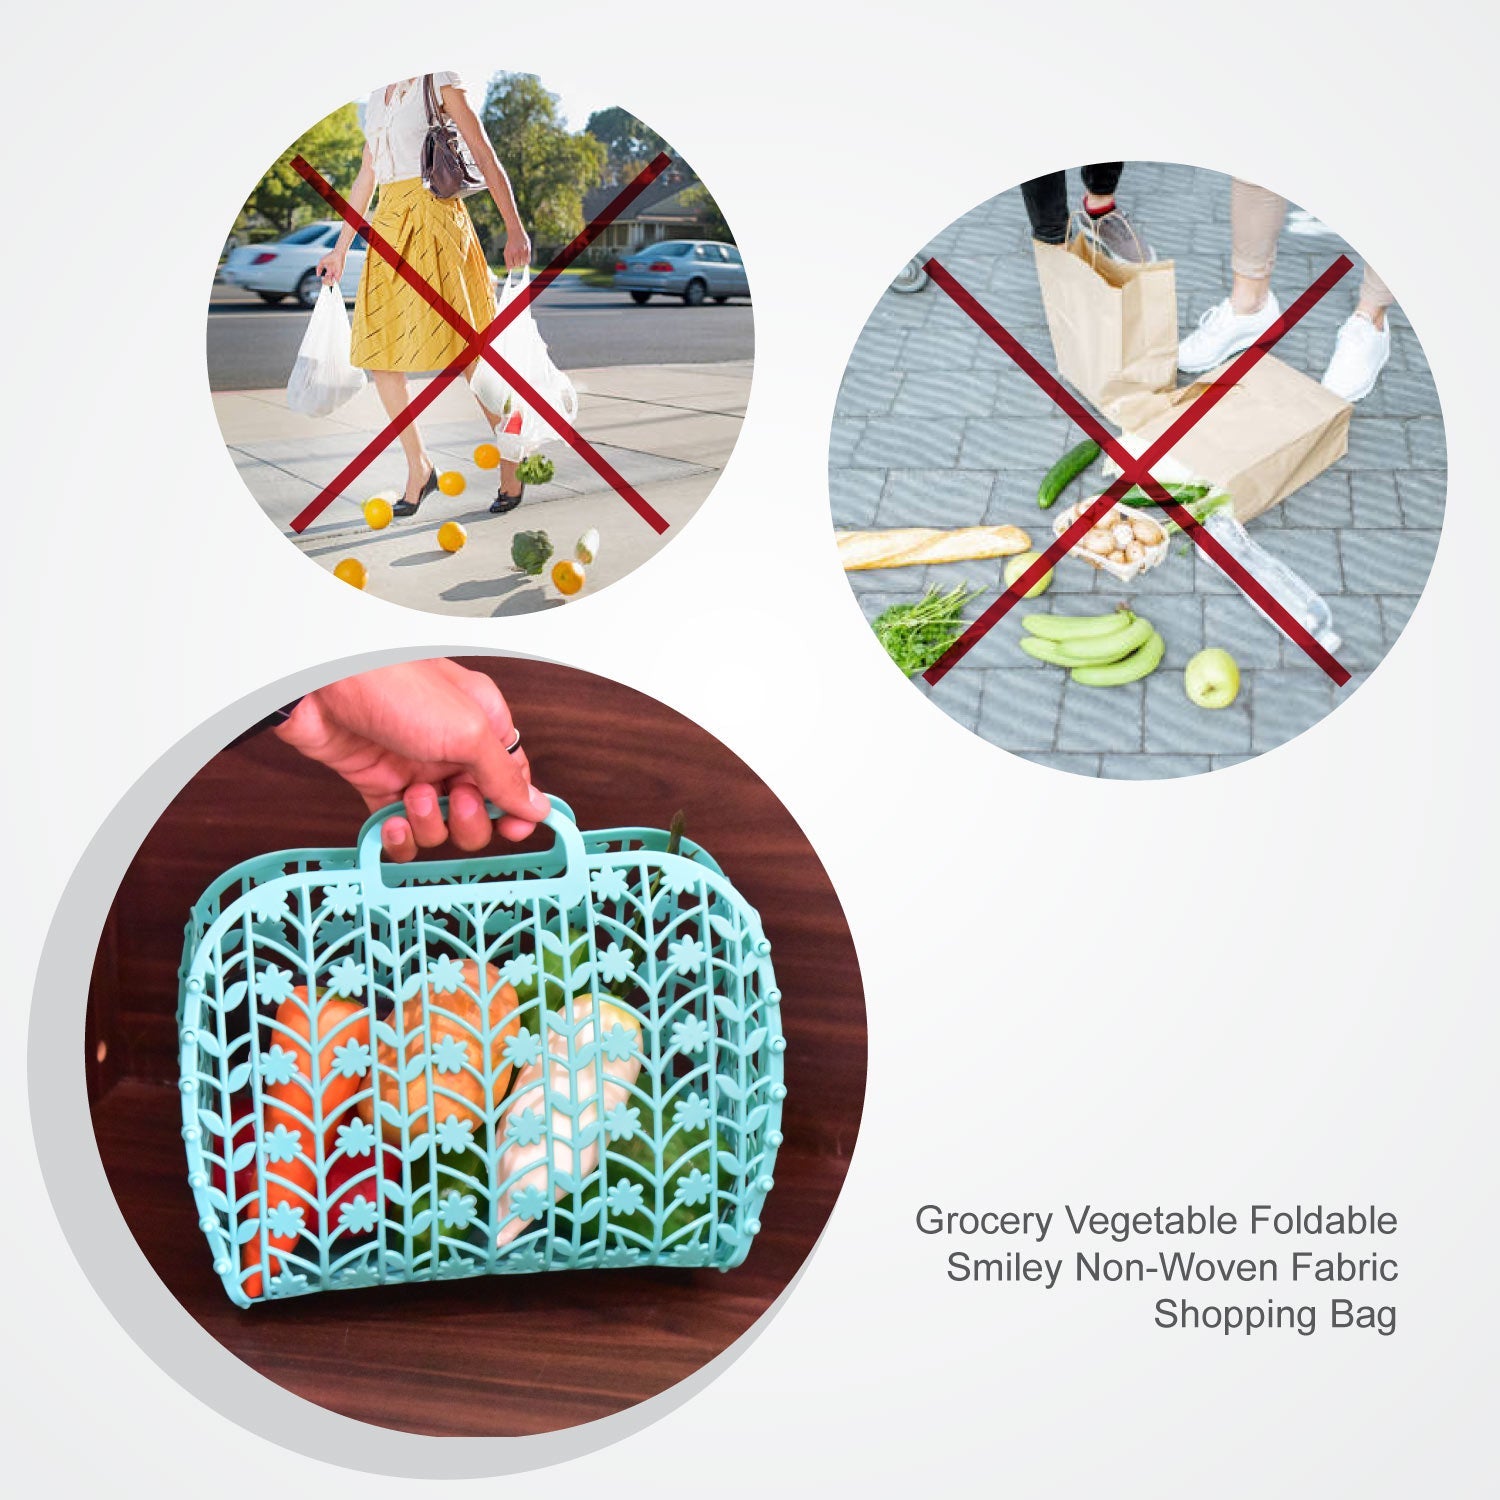 0761 Grocery Vegetable Foldable Smiley Non-Woven Fabric Shopping Bag DeoDap